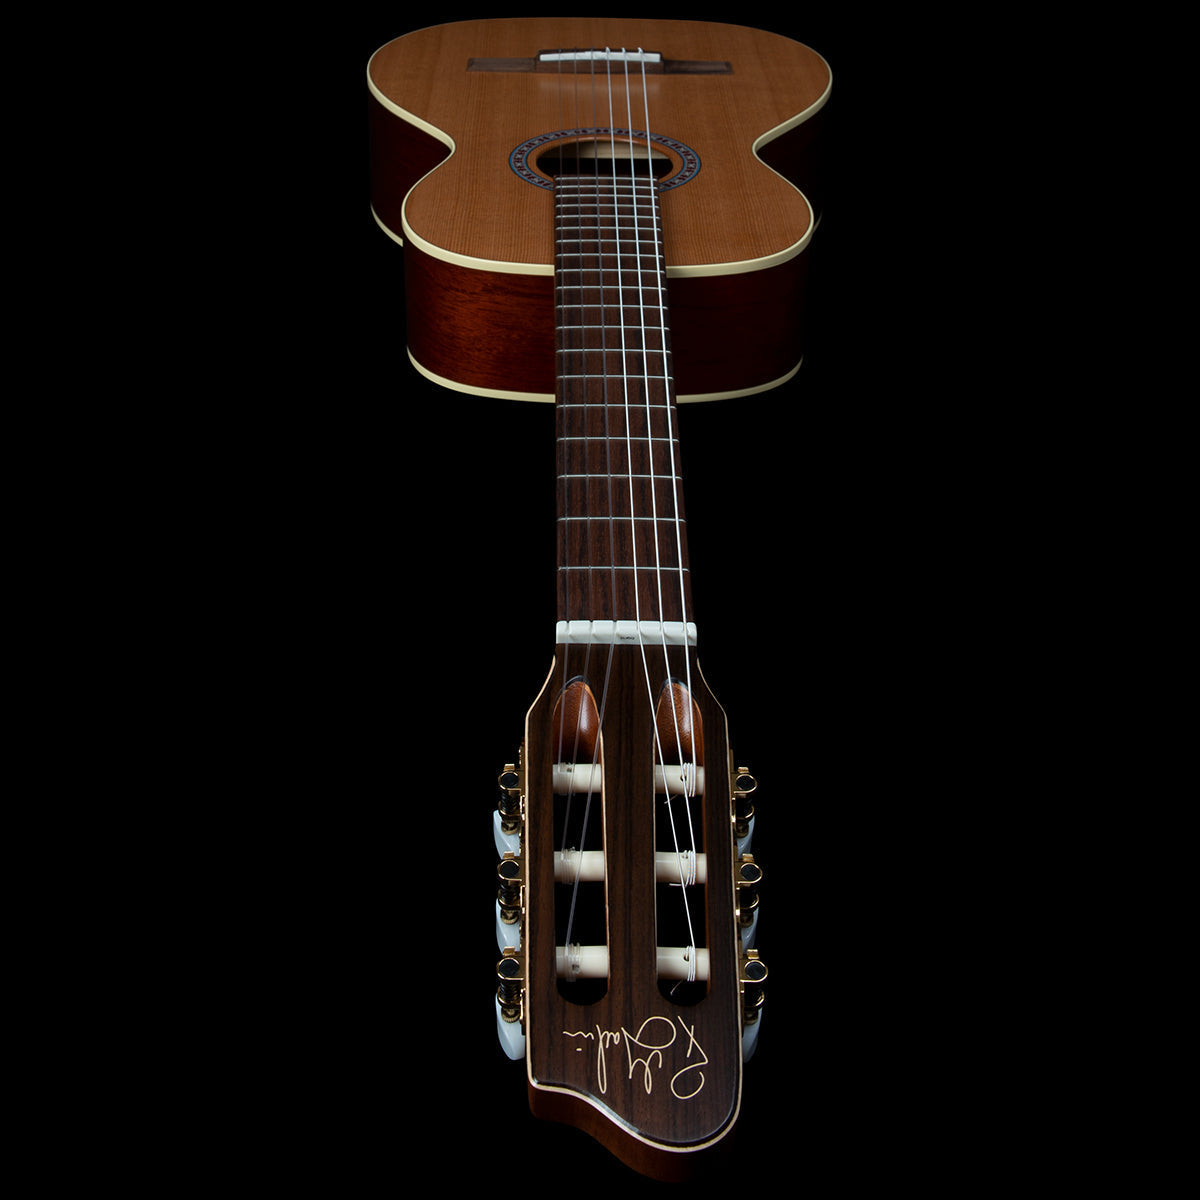 Godin Motif Nylon String Guitar, Acoustic Guitar for sale at Richards Guitars.